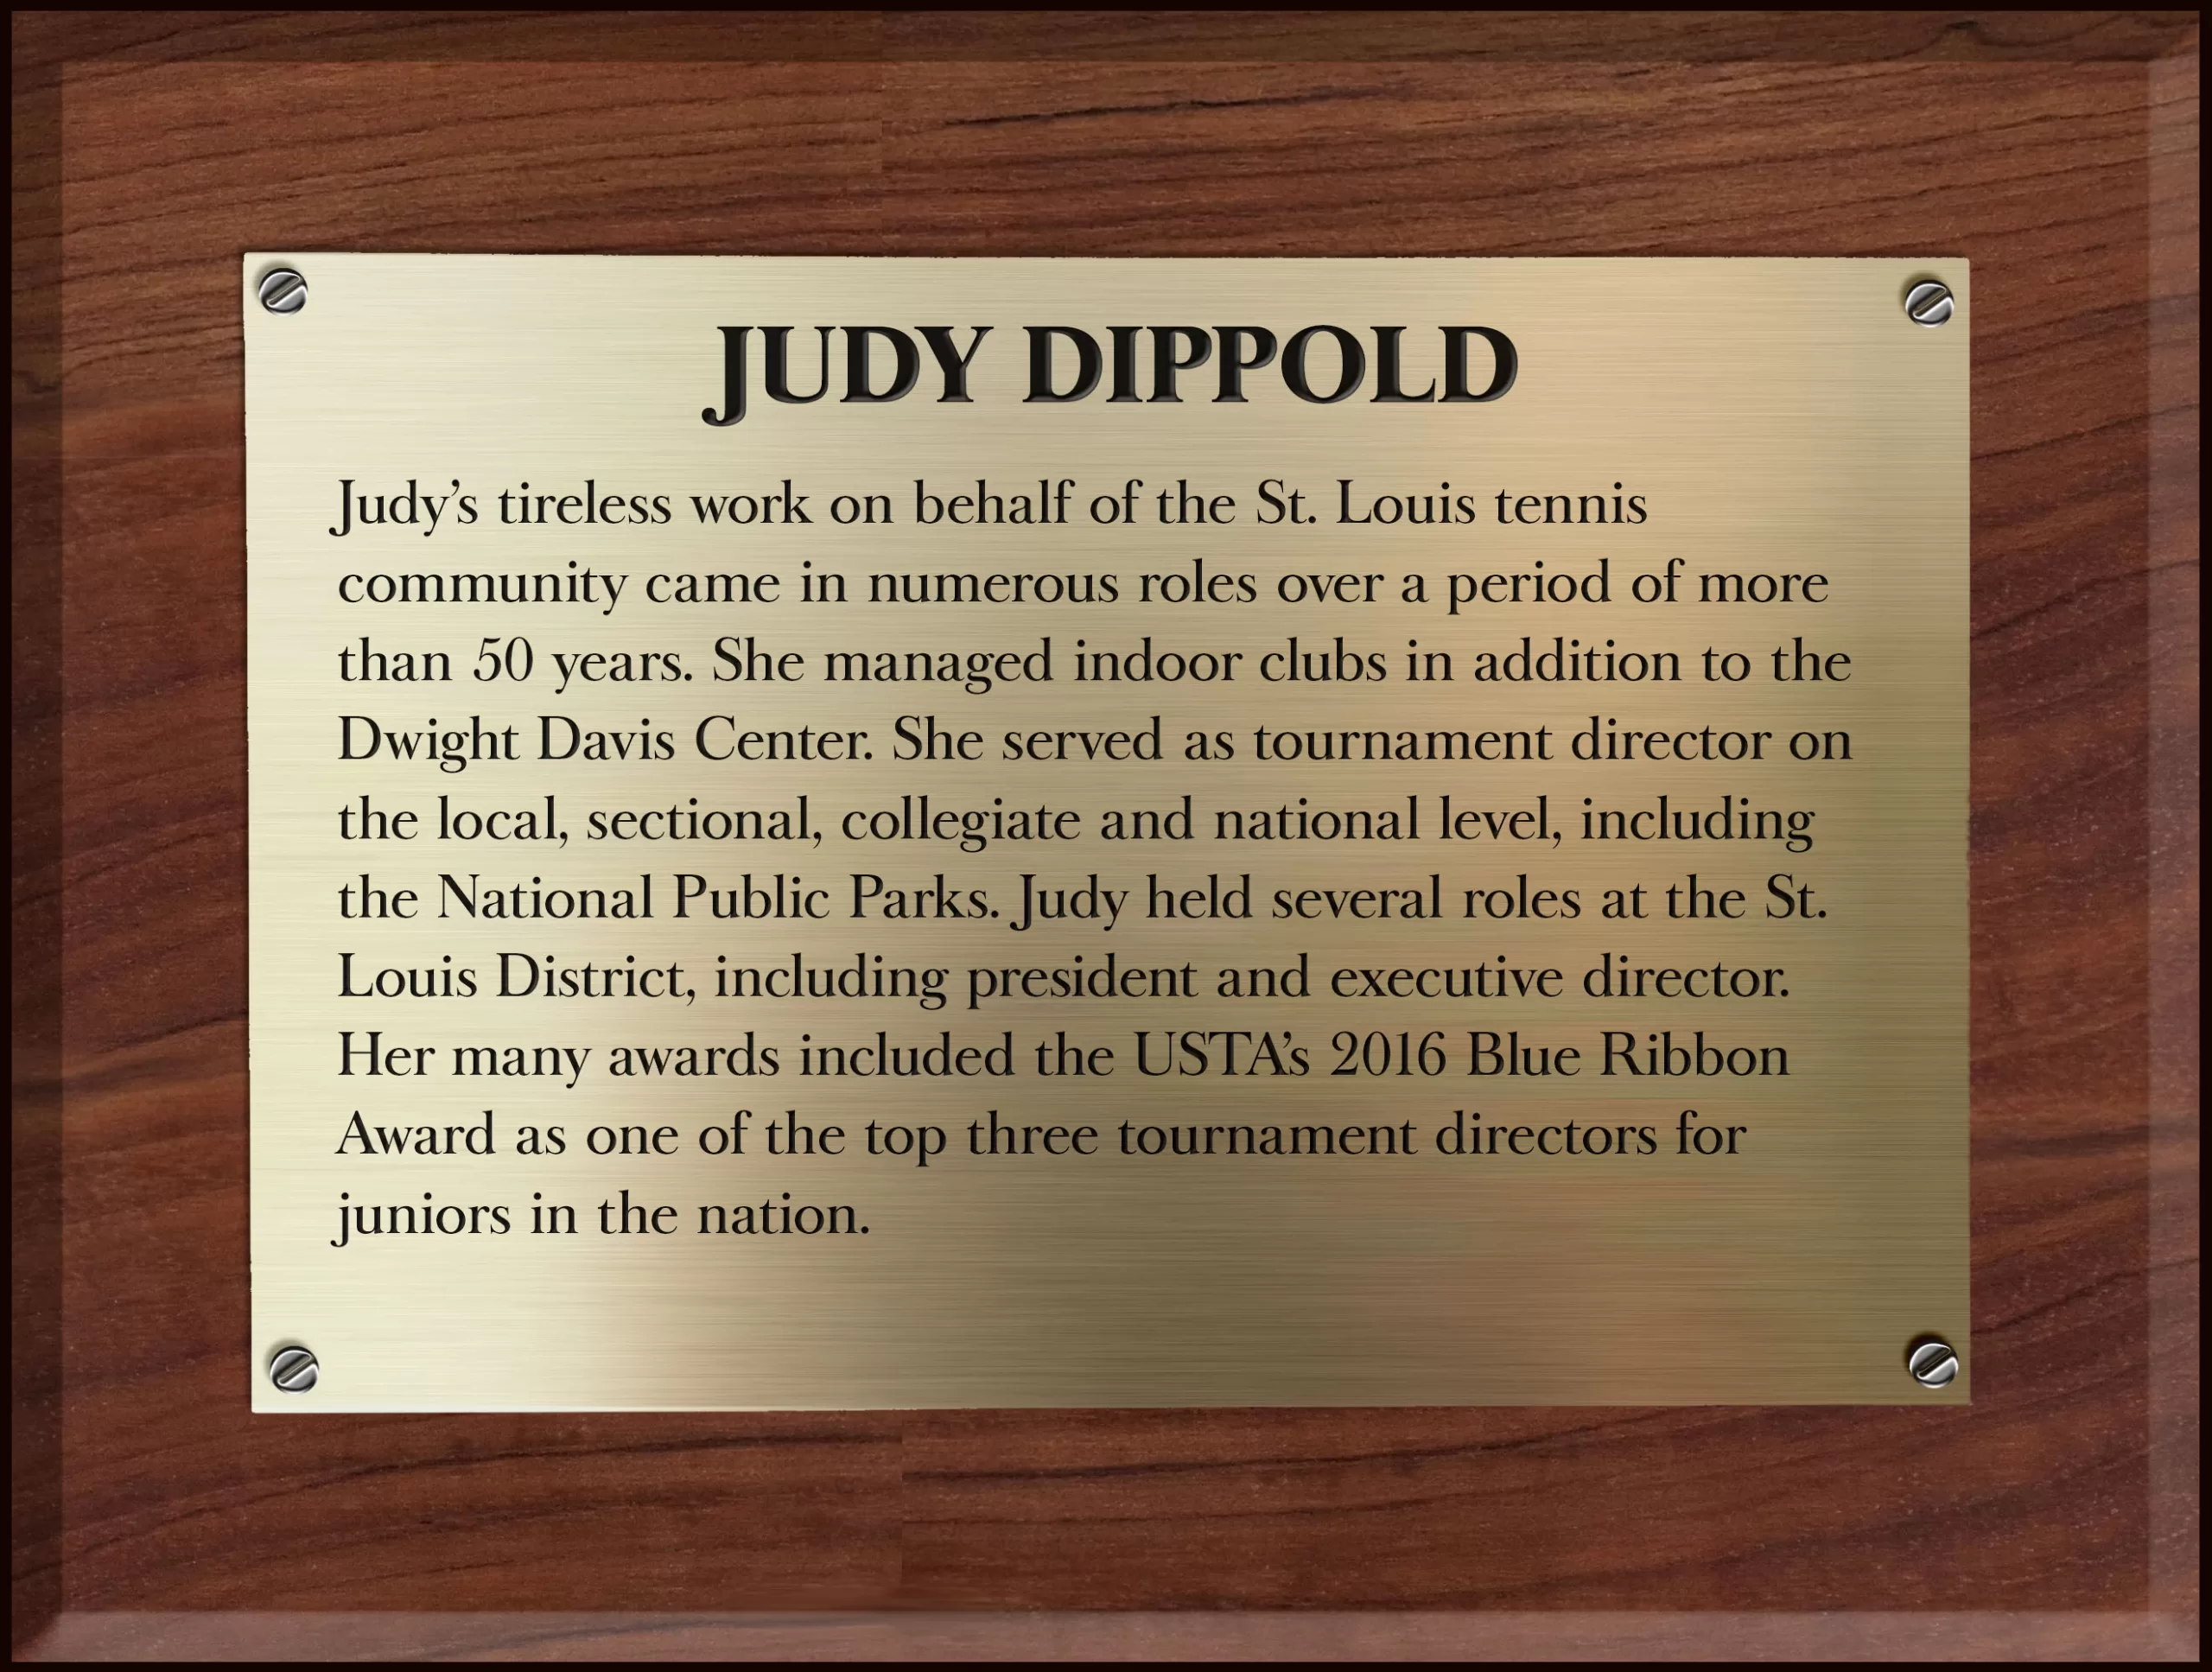 Judy Dippold